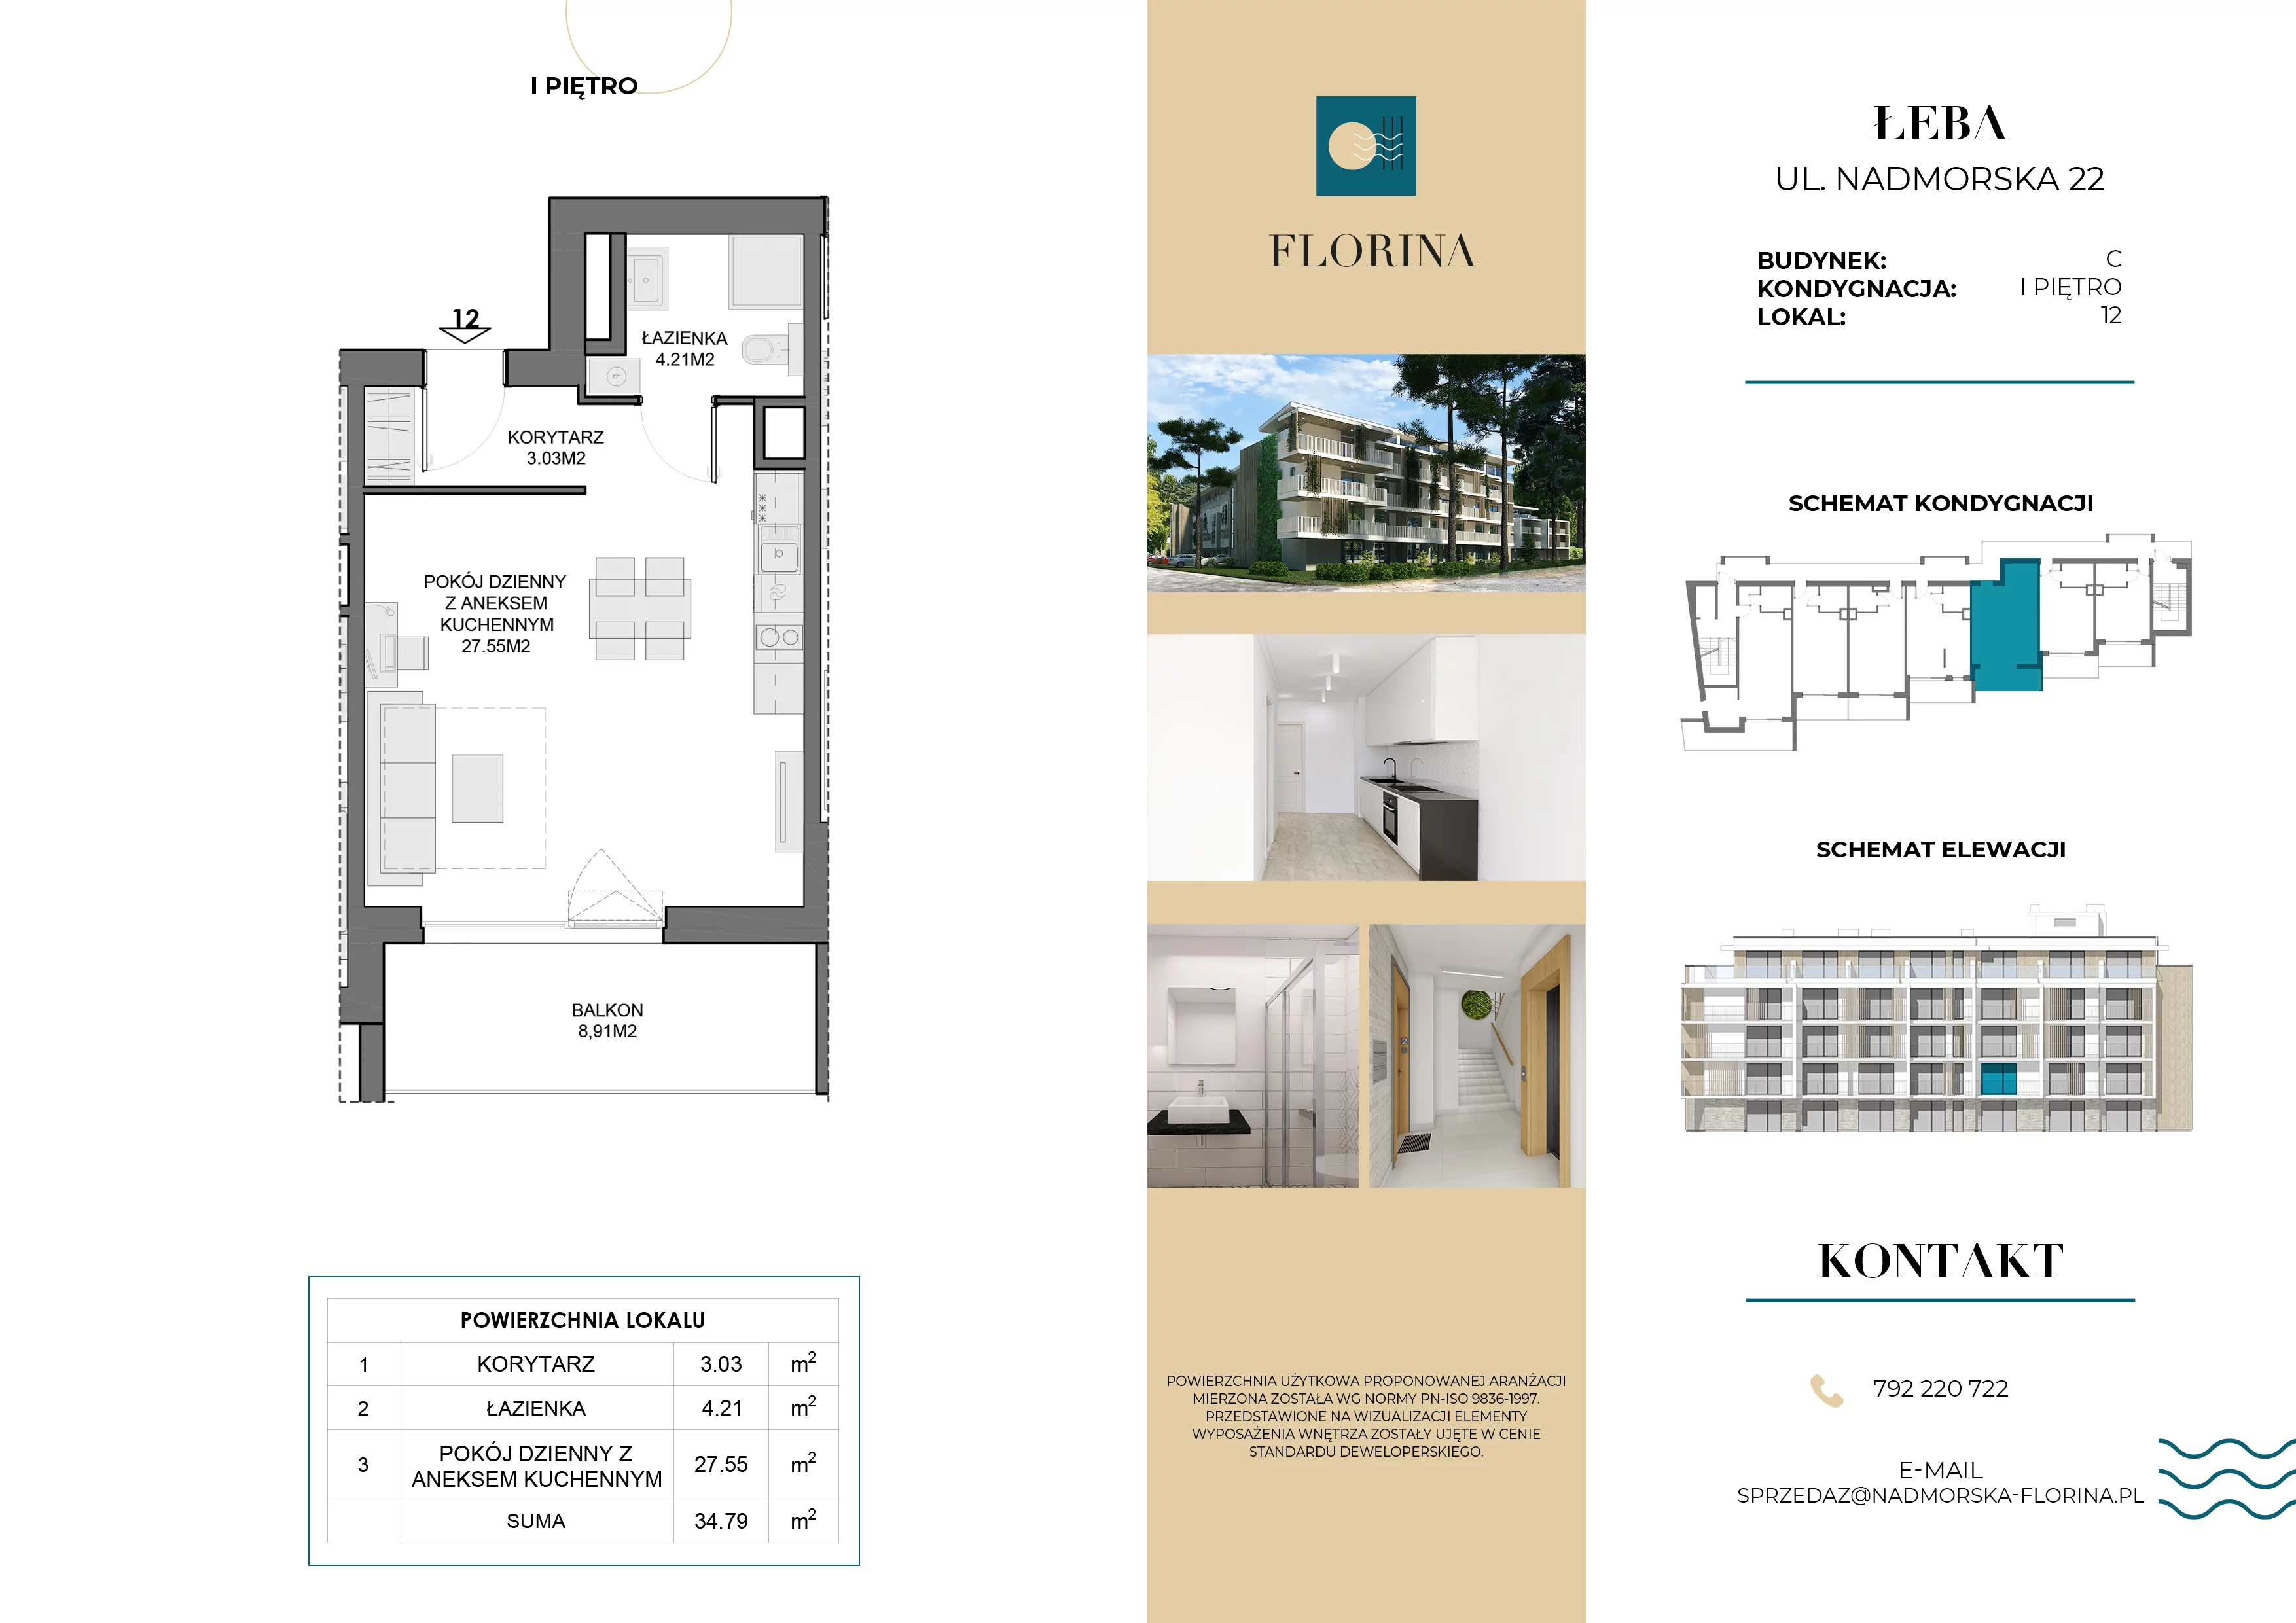 Apartament inwestycyjny 34,79 m², piętro 1, oferta nr C.M12, Nadmorska Florina, Łeba, ul. Nadmorska